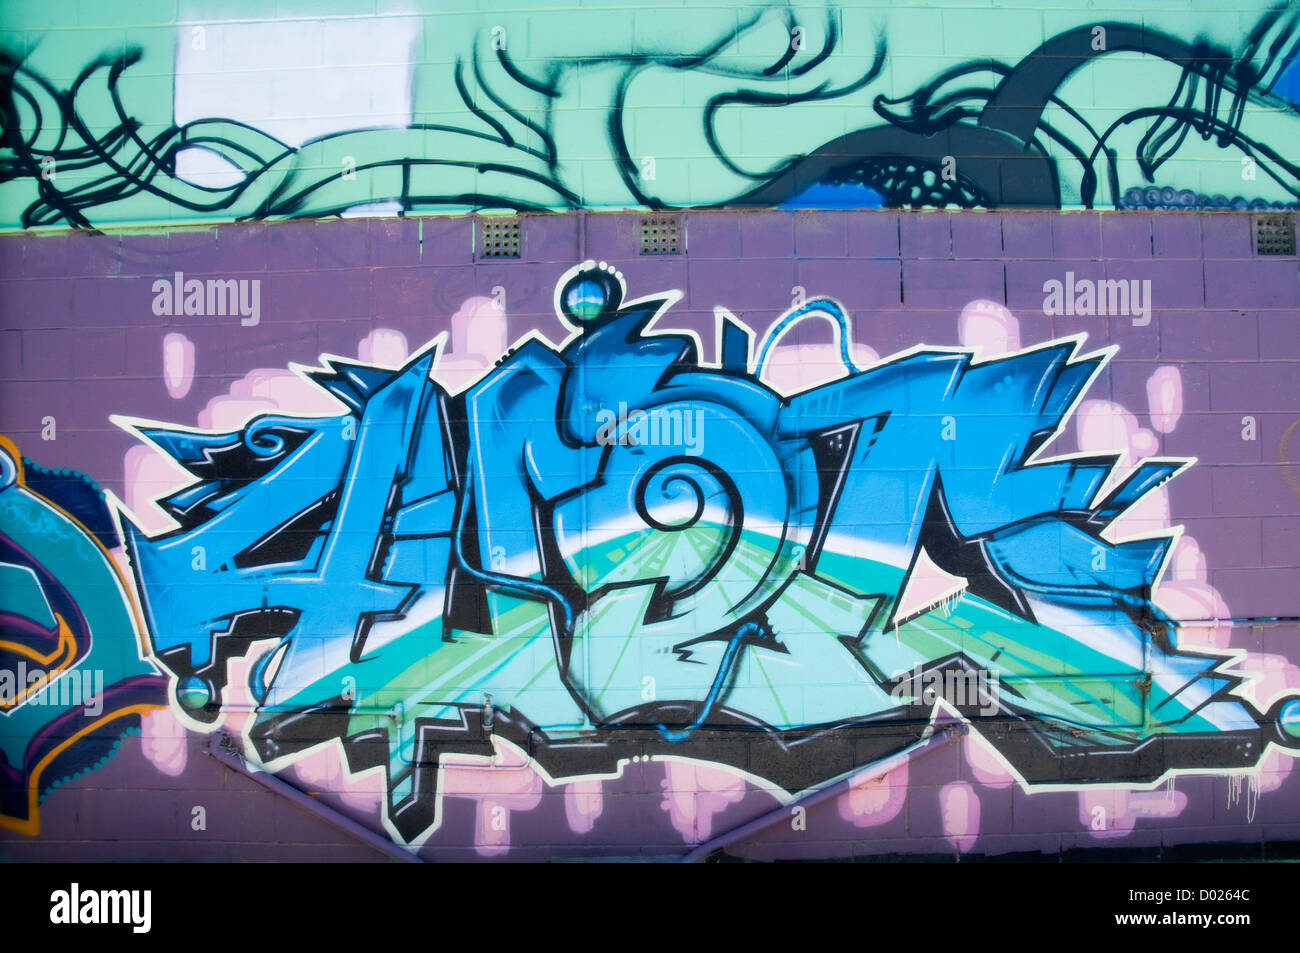 Street Art or grafitti on a building in Brighton, Adelaide, South Australia Stock Photo